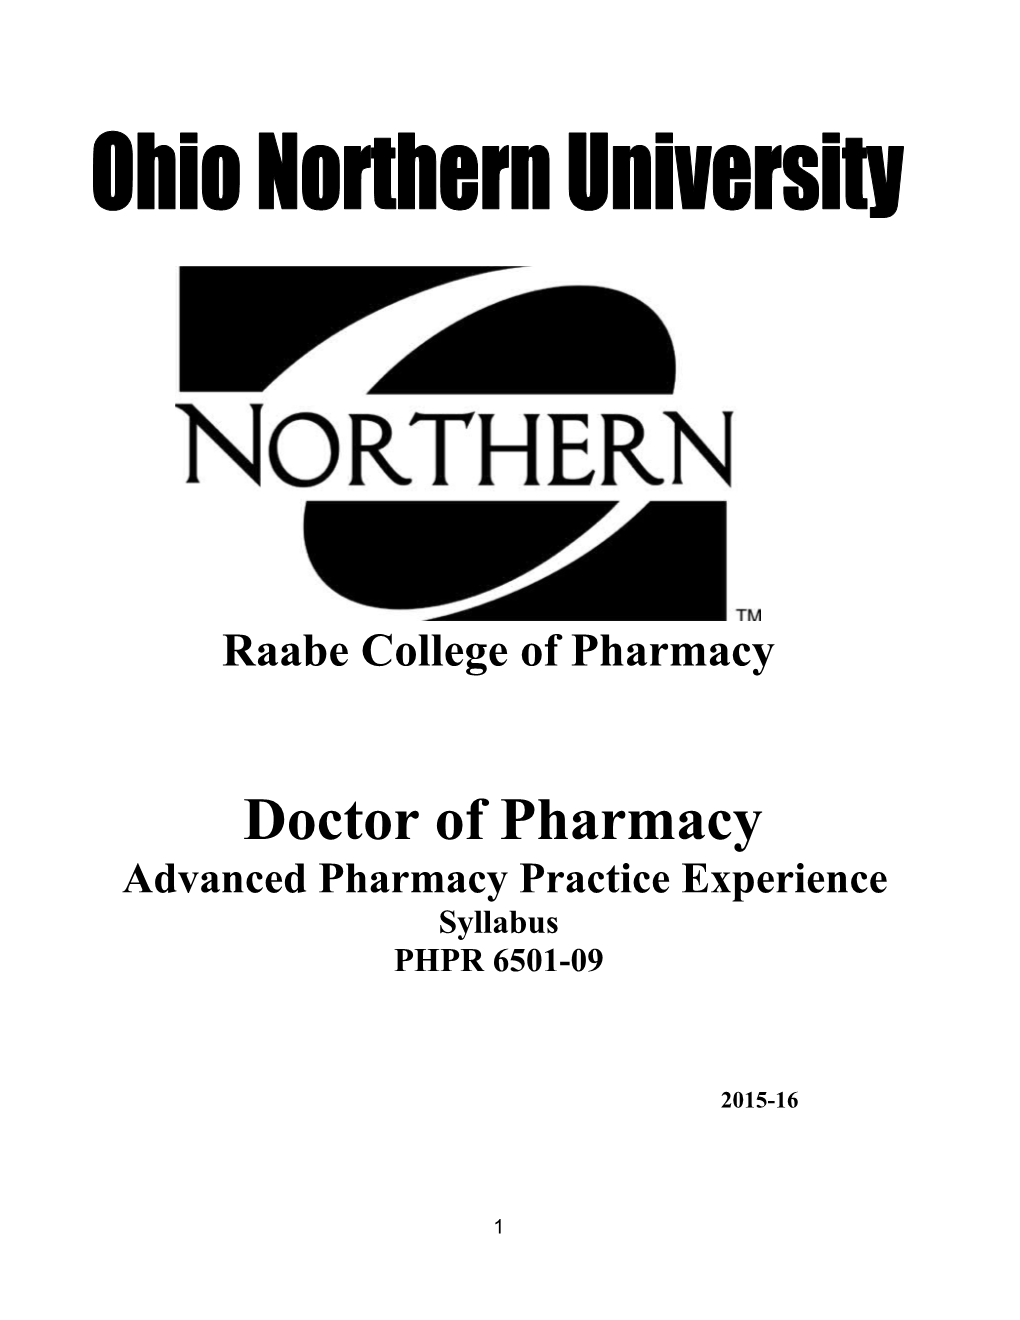 Raabe College of Pharmacy